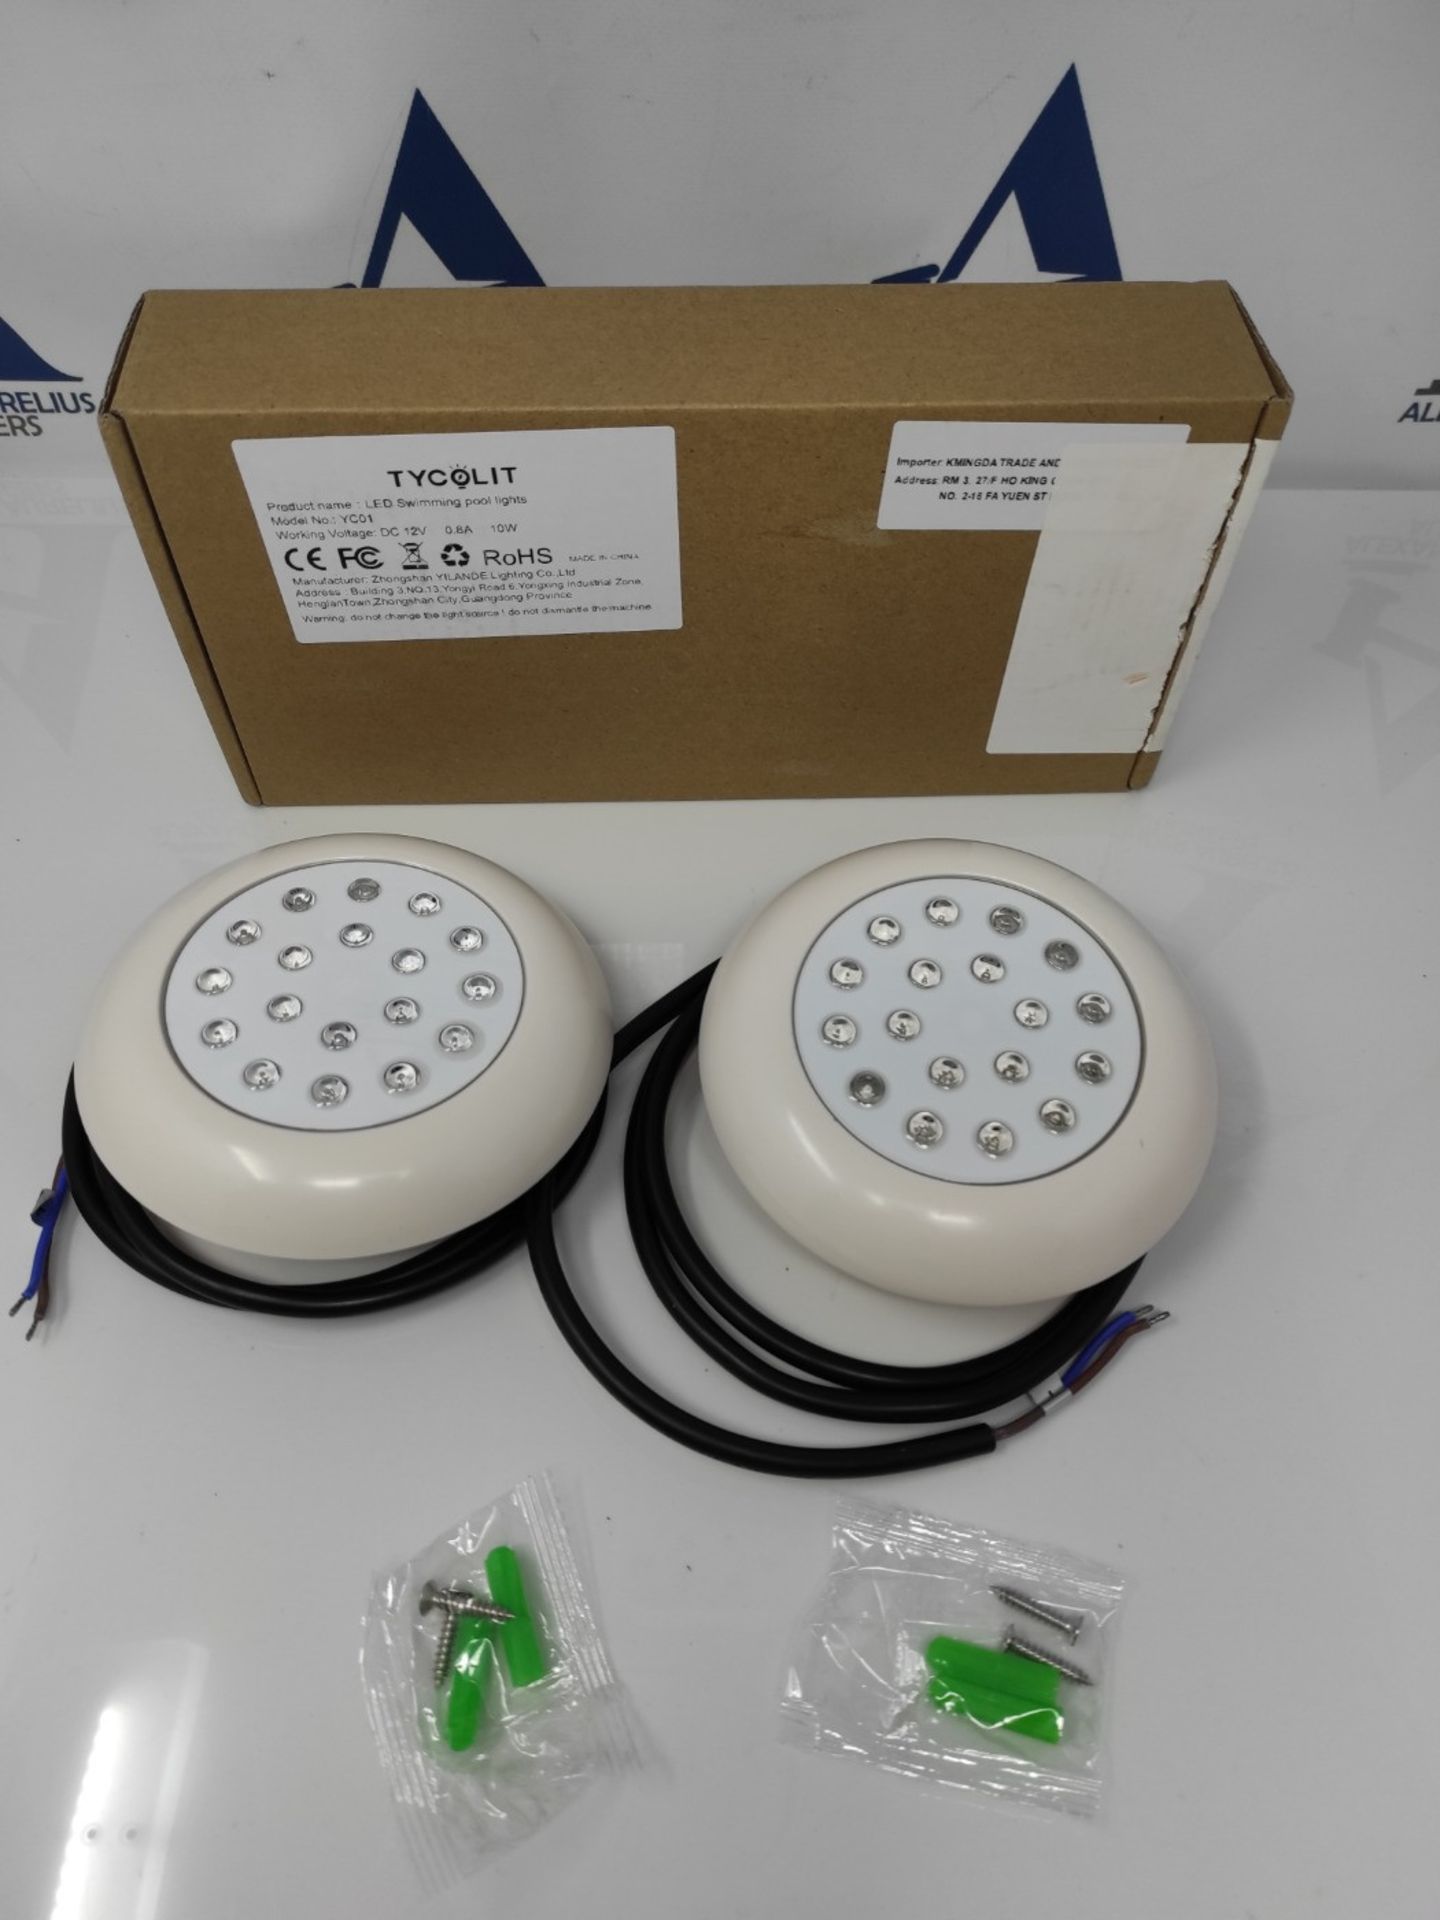 SANFOU 2 Pack Hot Tub Lights,18 LED RGB Underwater Pool Lights,IP68 Waterproof Submers - Image 2 of 2